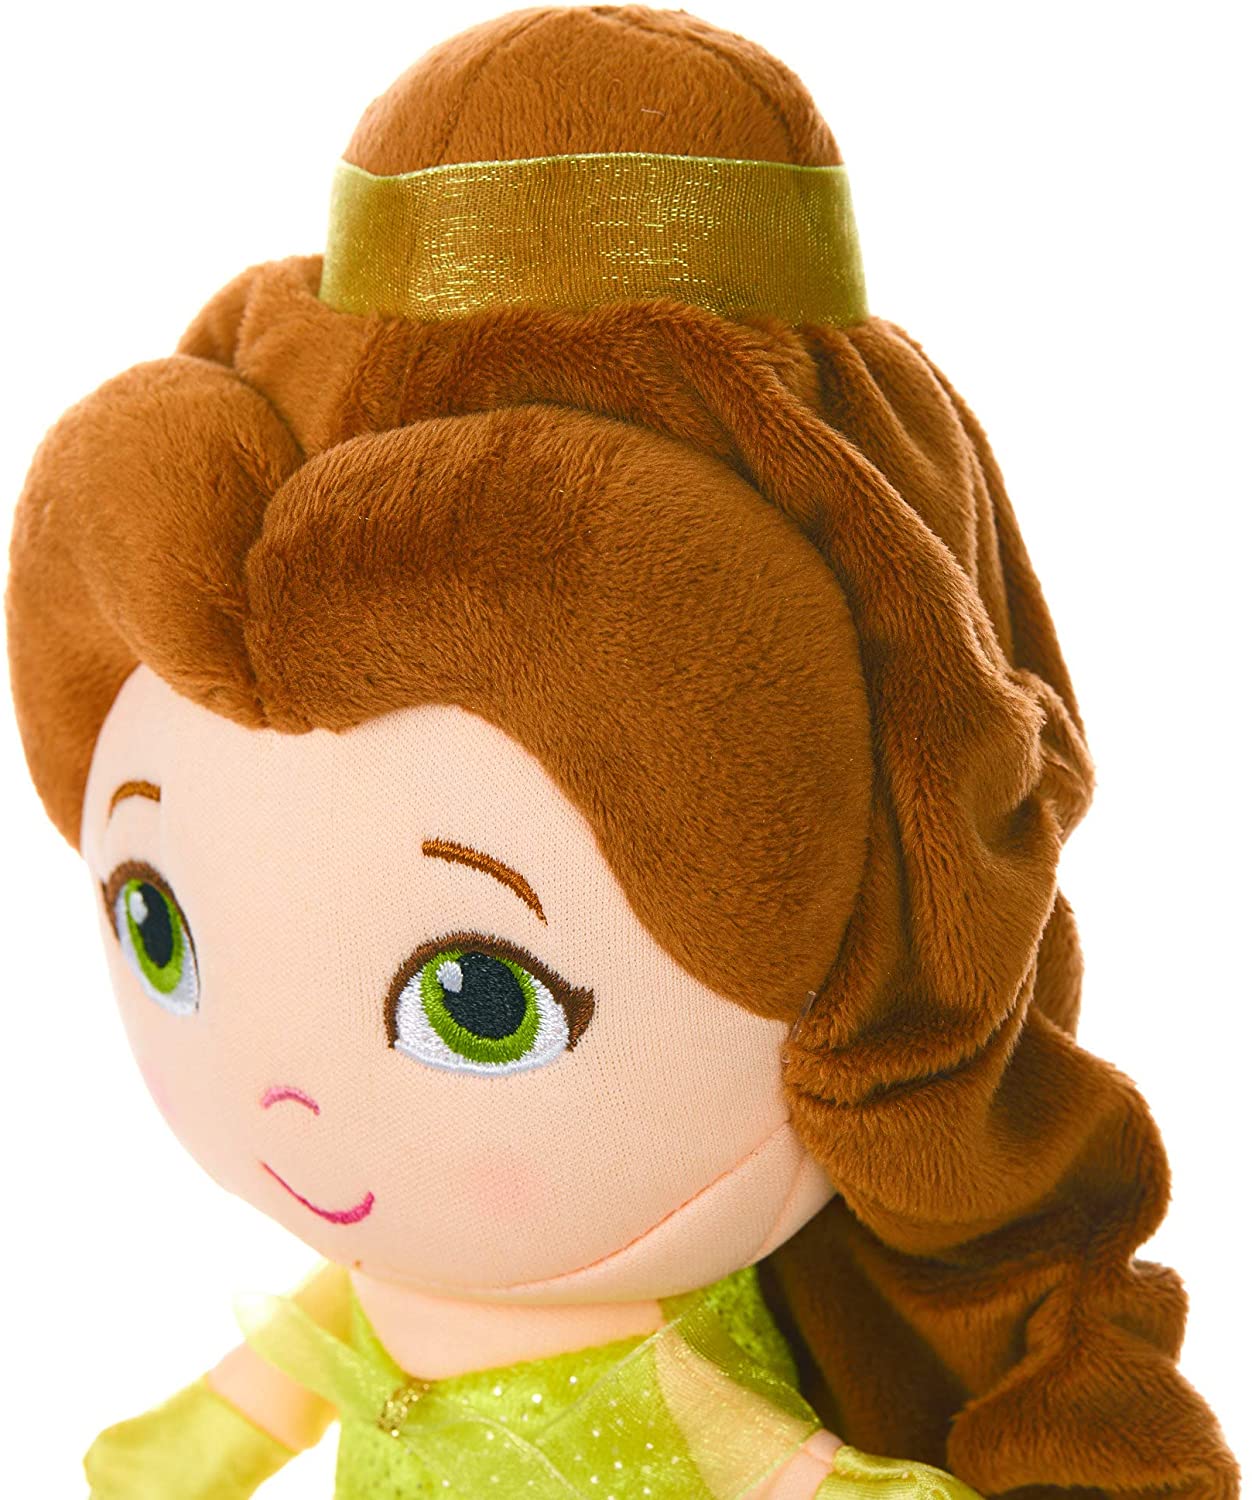 Disney Princess Belle 12” Plush Doll with Sounds